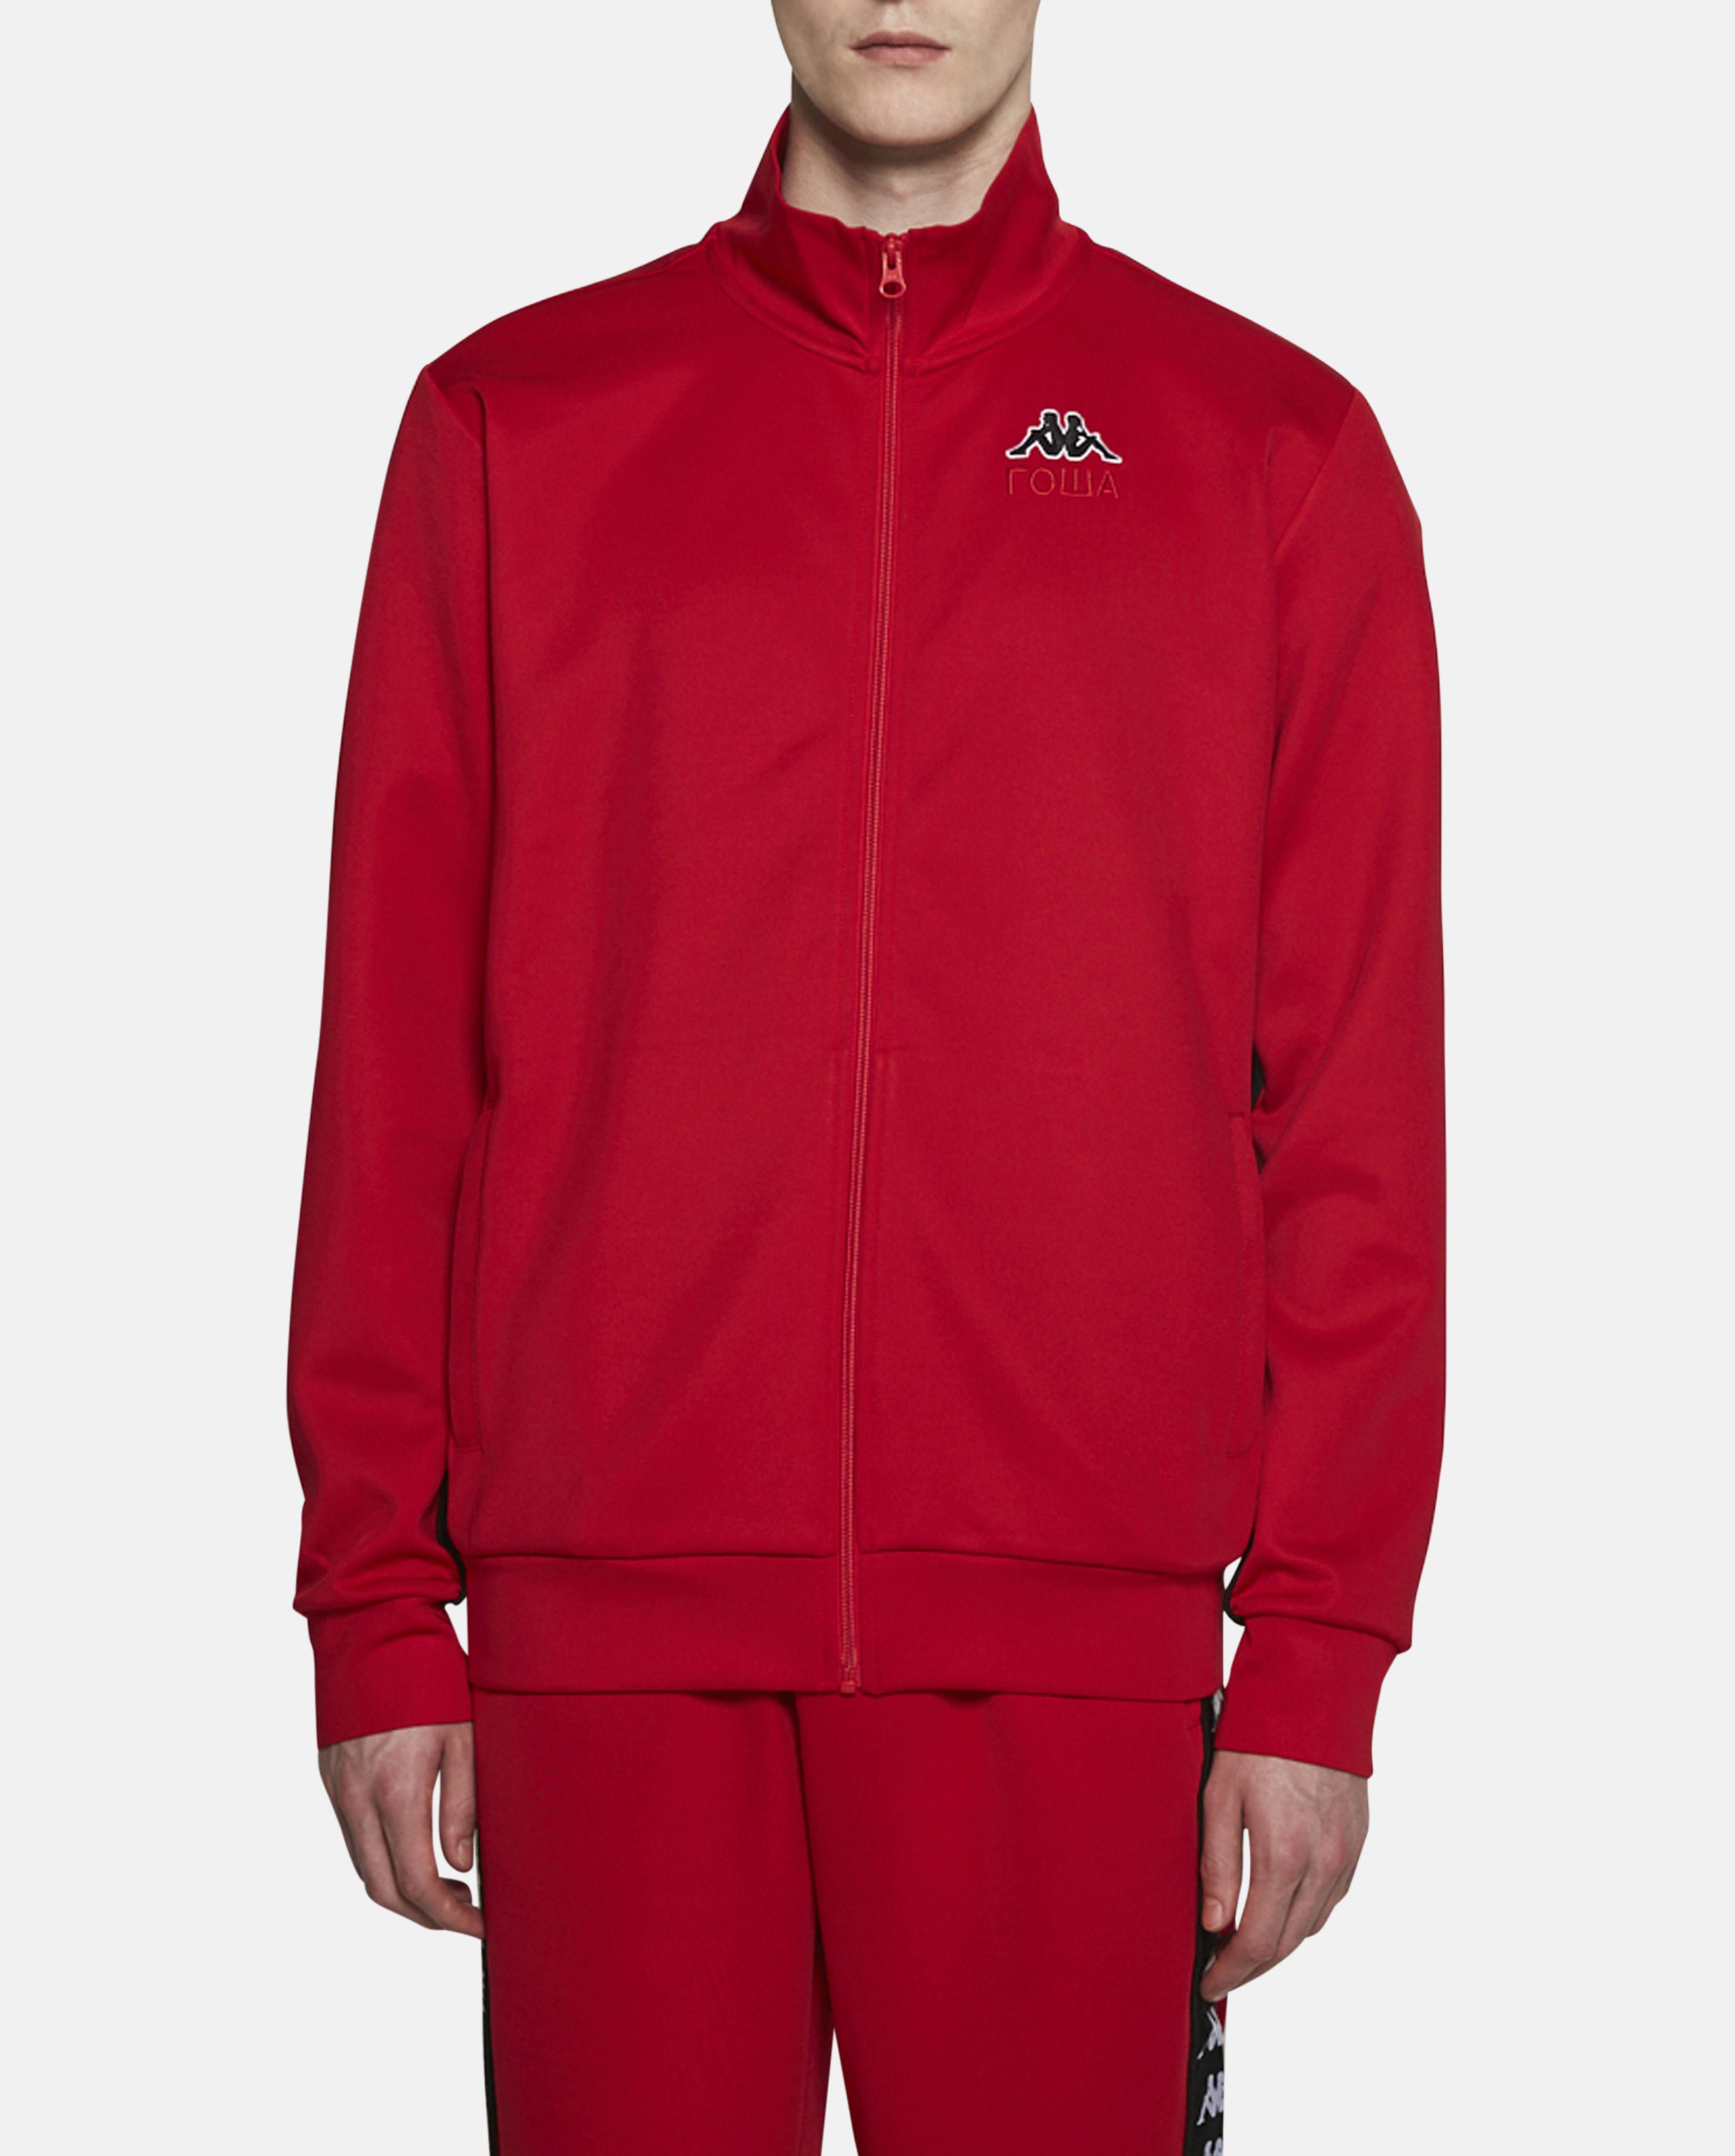 Gosha Rubchinskiy Synthetic Kappa Track Jacket in Red for Men - Lyst